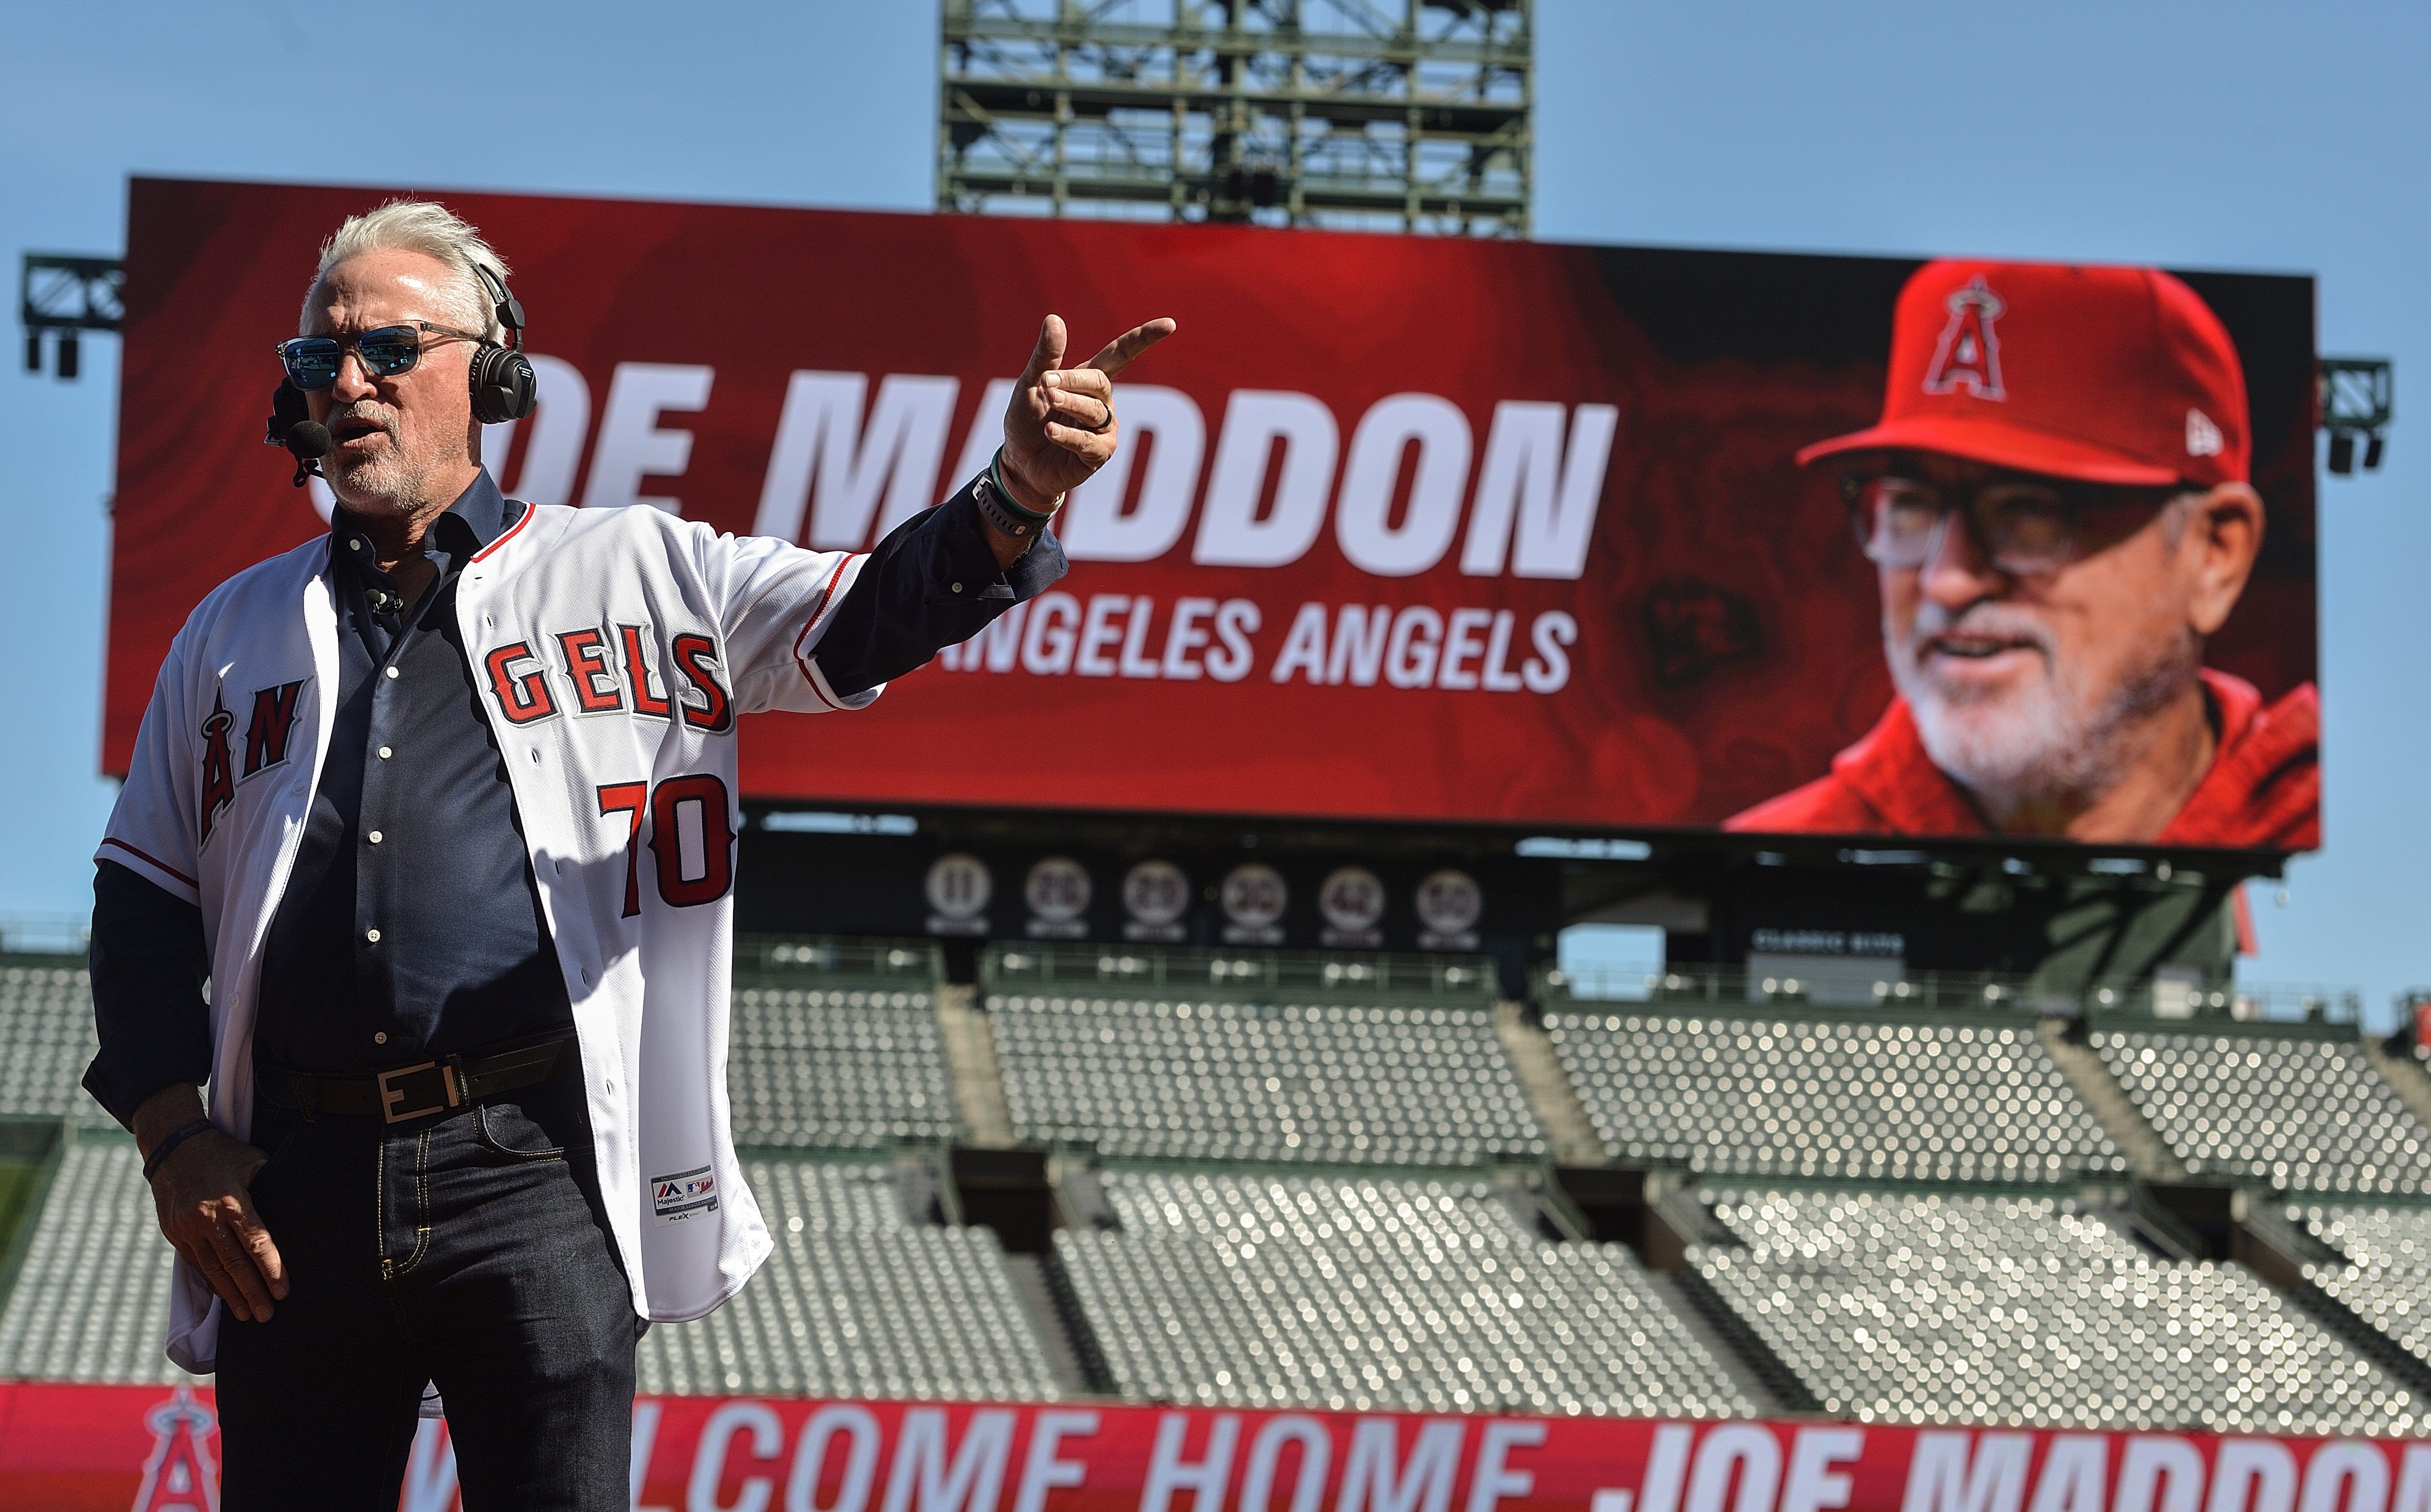 Joe Maddon doing charity work, talking Rays, Cubs and more baseball